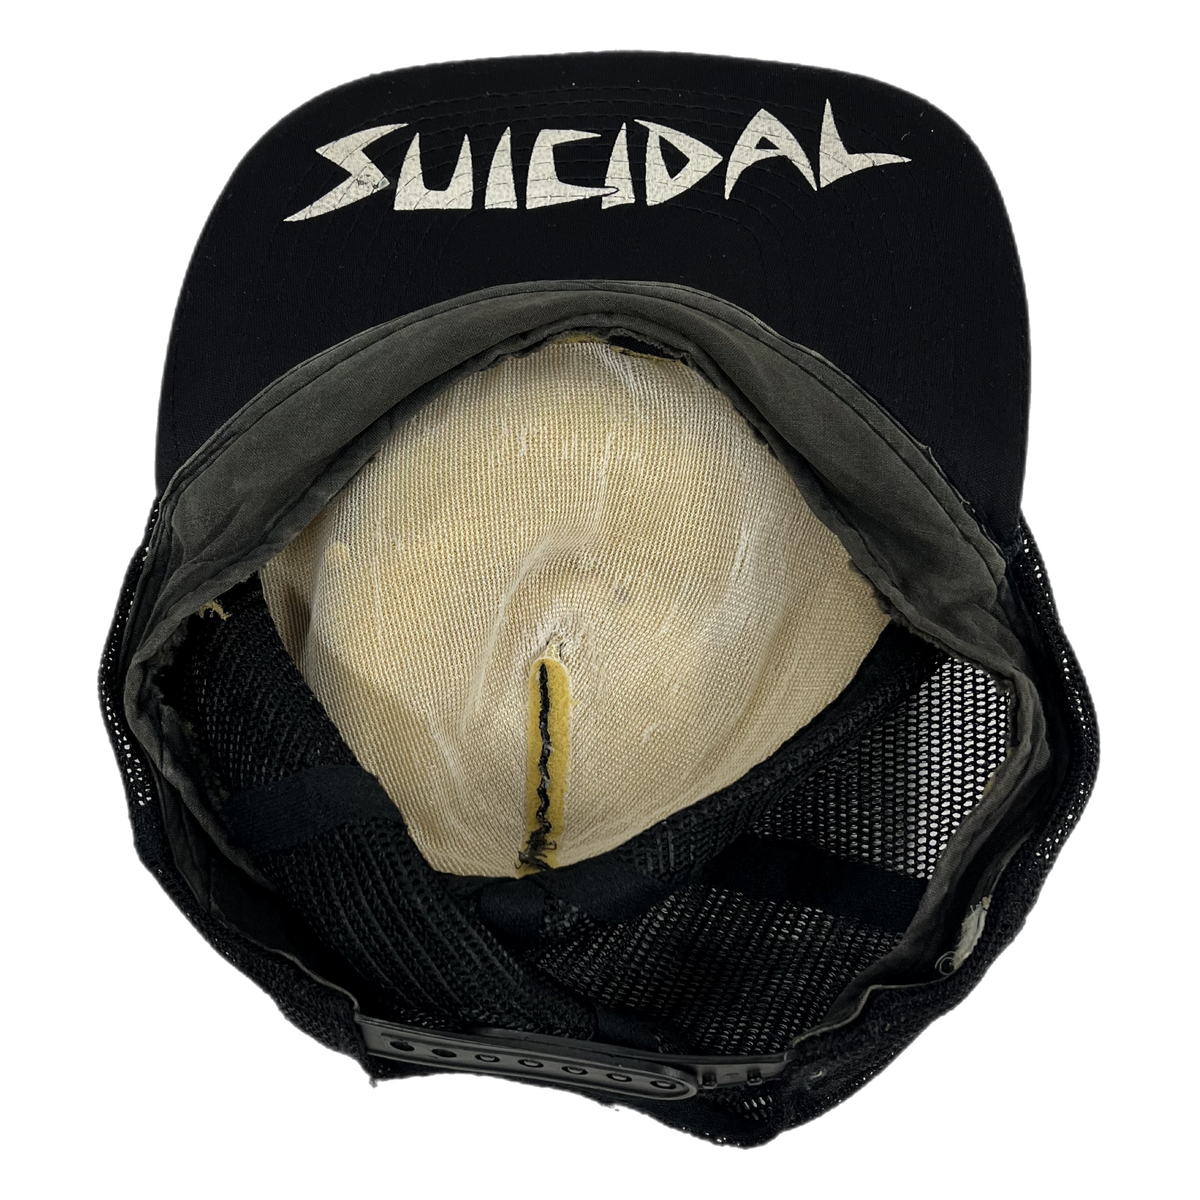 Vintage Suicidal Tendencies &quot;Suicidal&quot; Trucker Hat